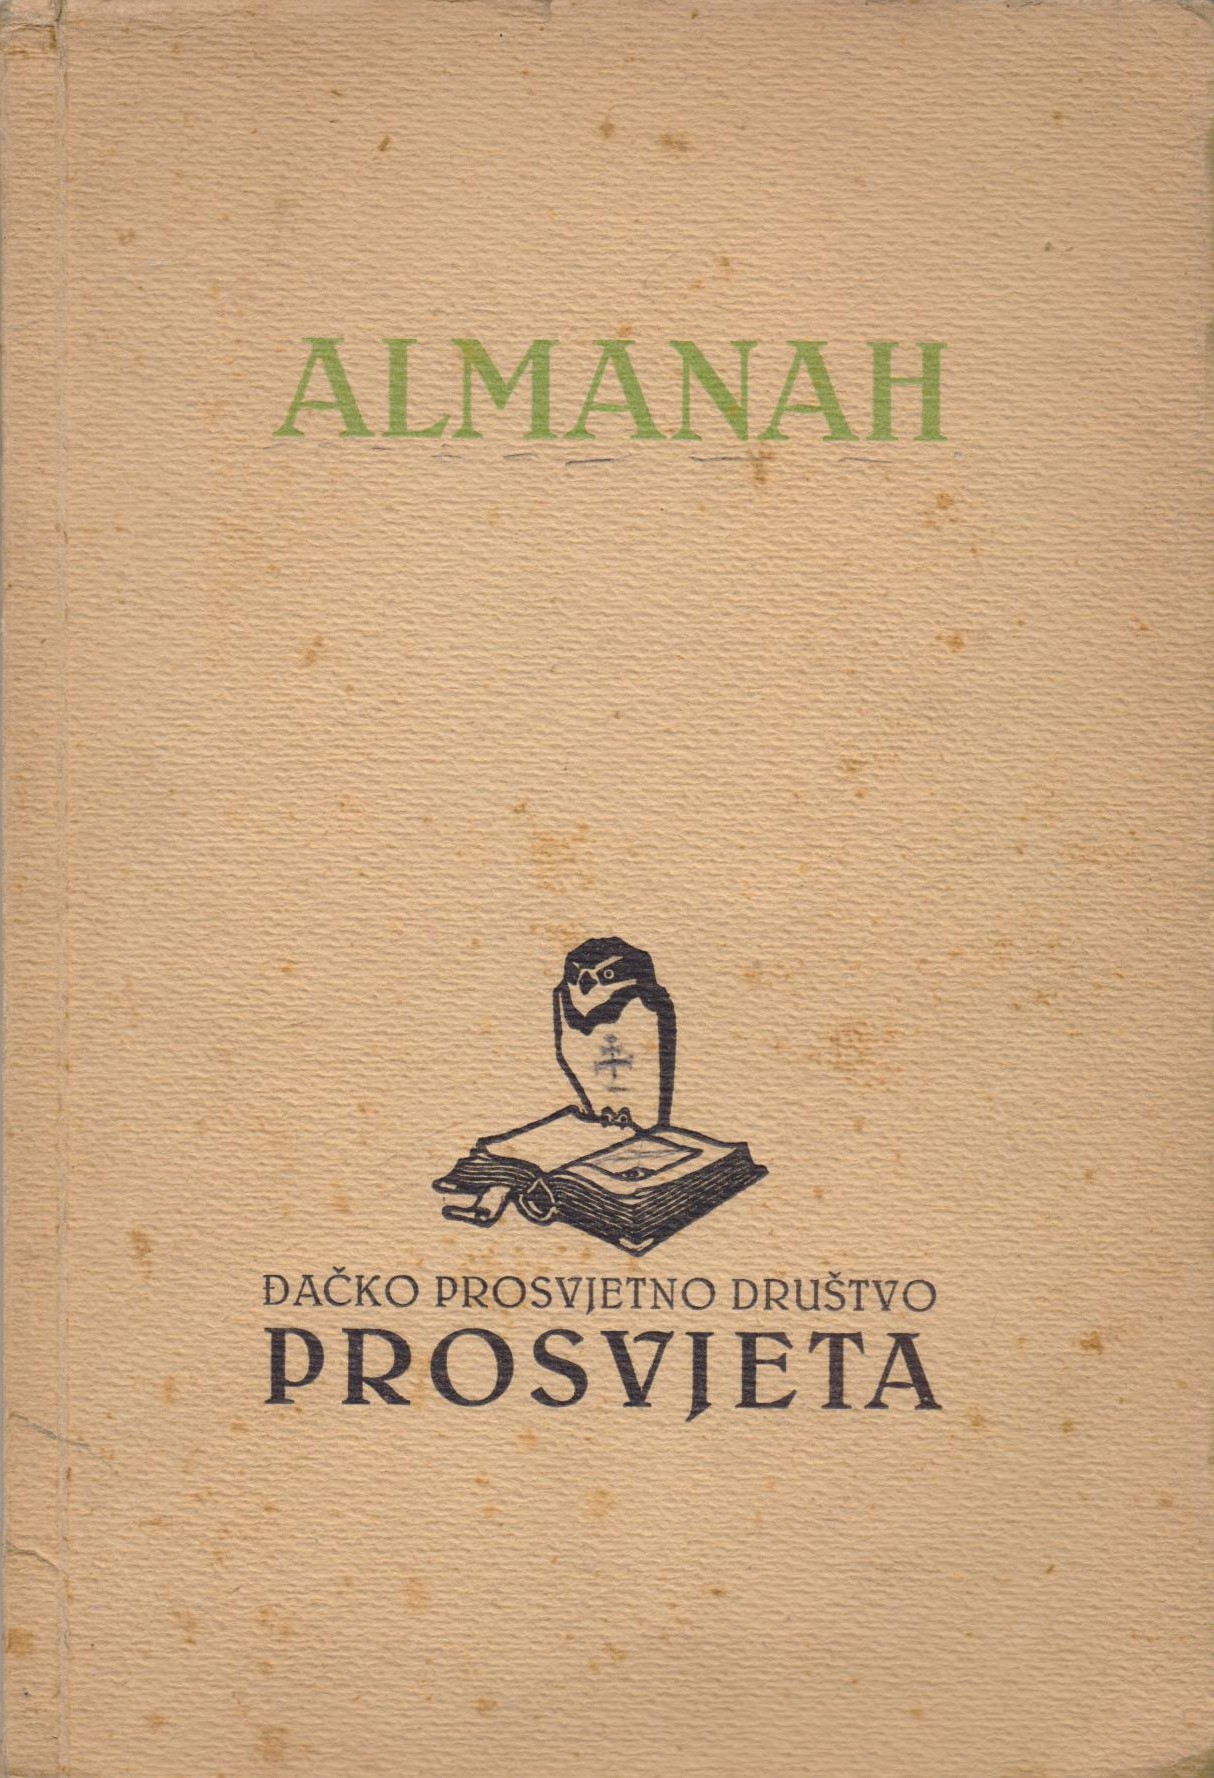 Almanah Ivo Šulc